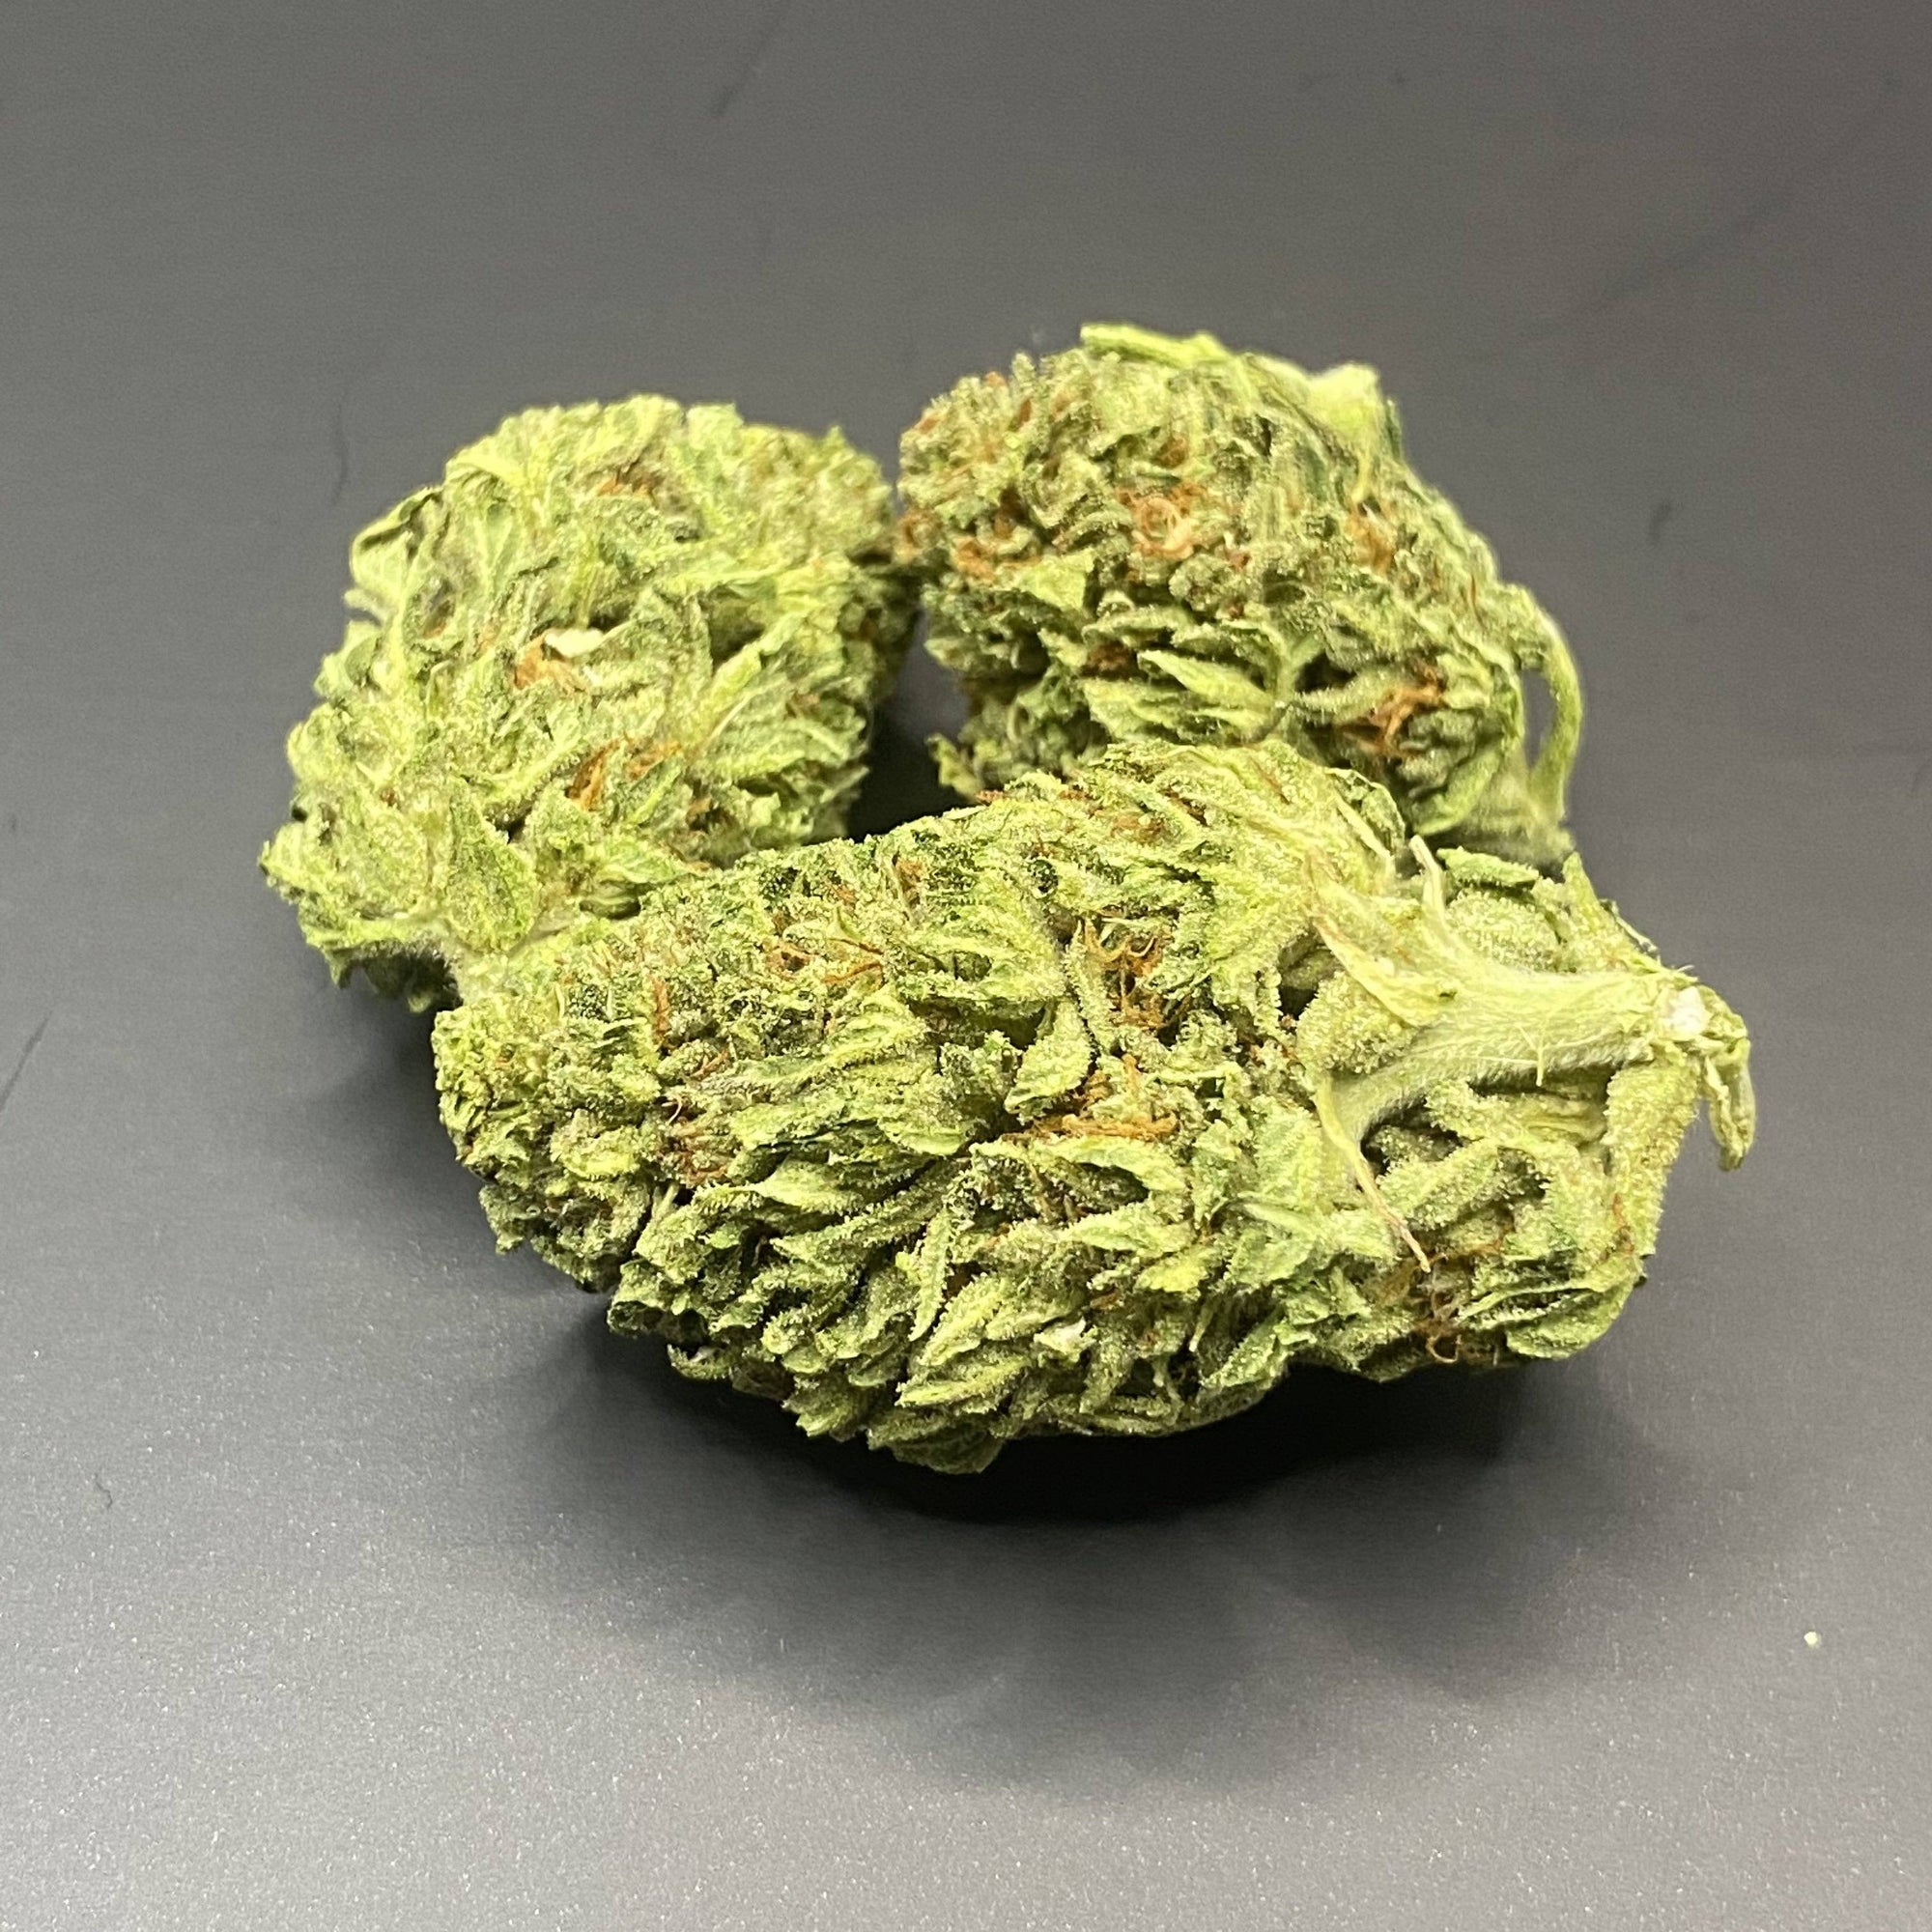 Classic Cookies Hemp Flower - BackWoodz CBD - Cartel Cannabis